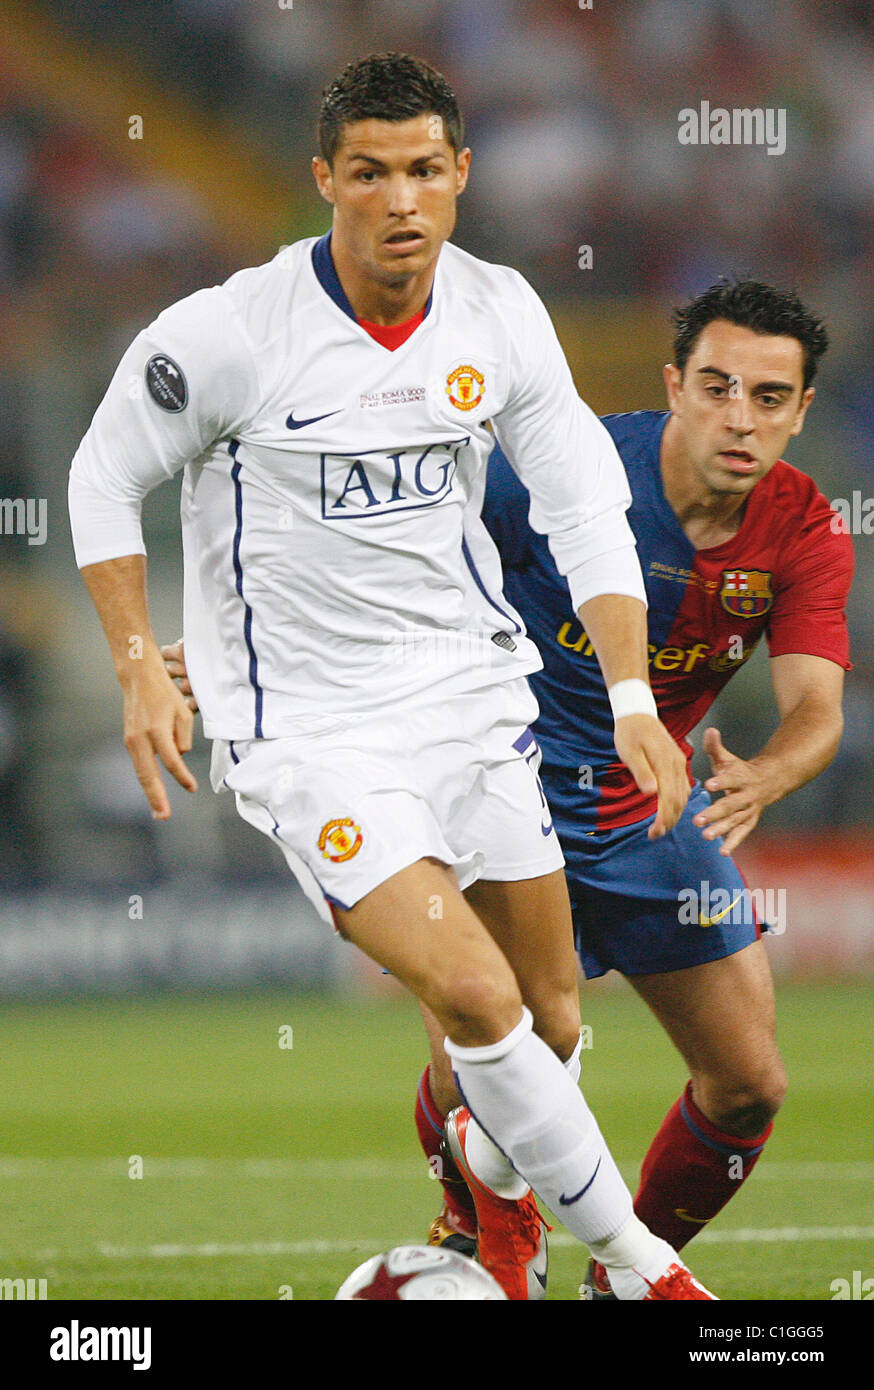 Cristiano Ronaldo der 2009 UEFA Champions League Finale FC Barcelona gewann  2: 0 gegen Manchester United FC Rom Italien - 27.05.09 Stockfotografie -  Alamy